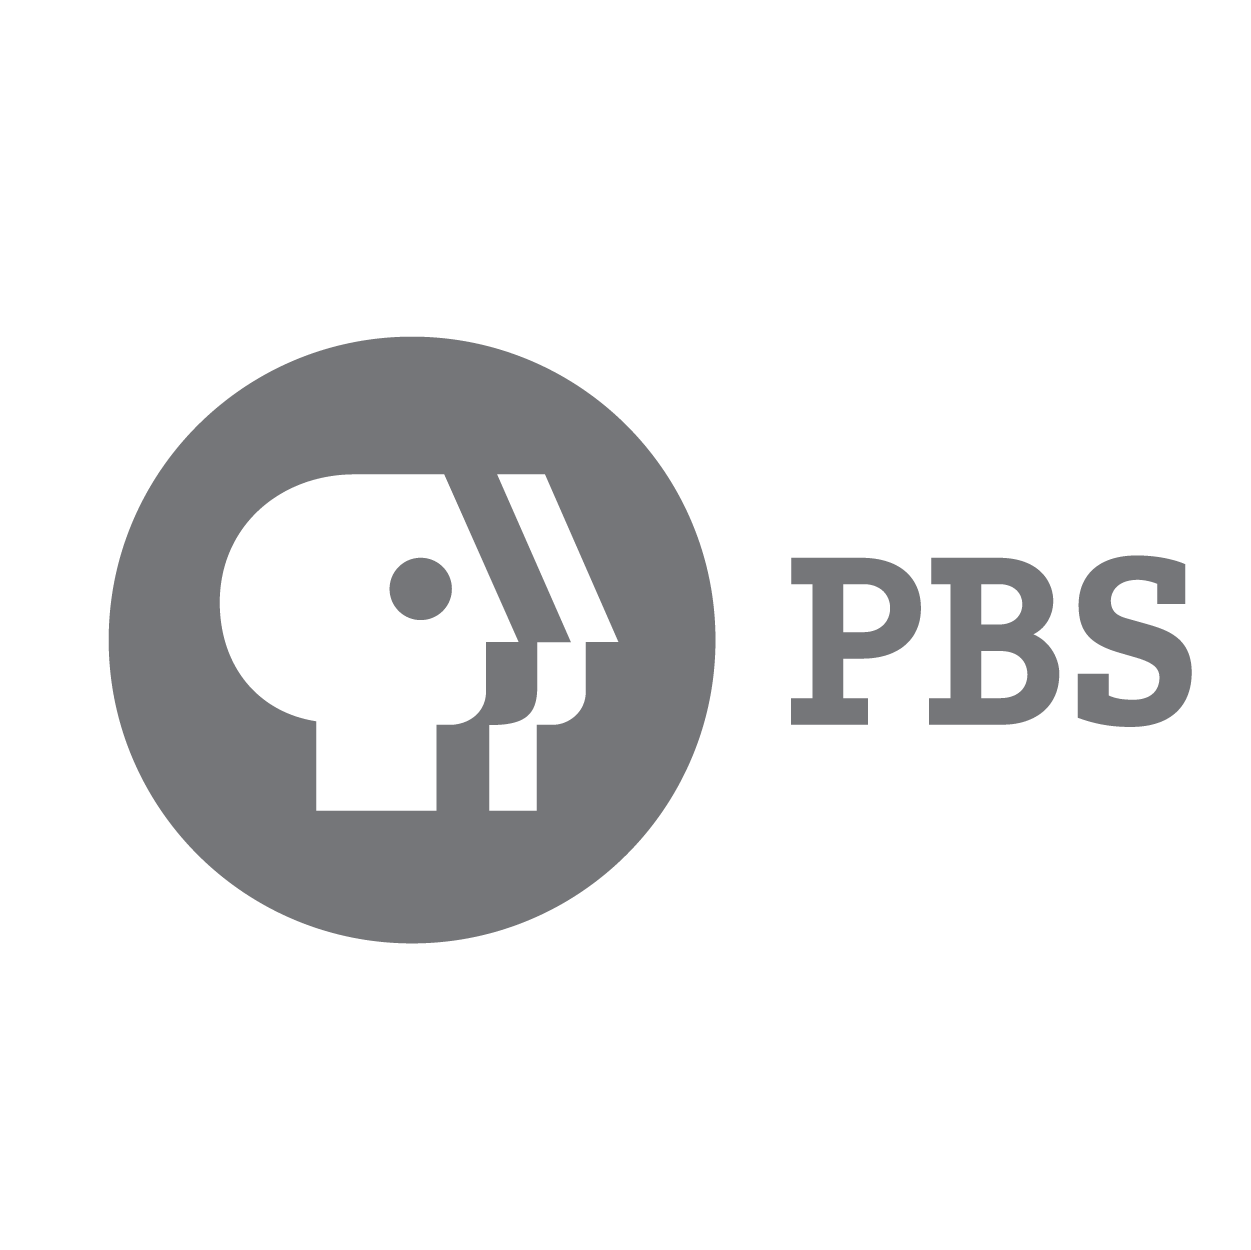 PBS logo logo in grey